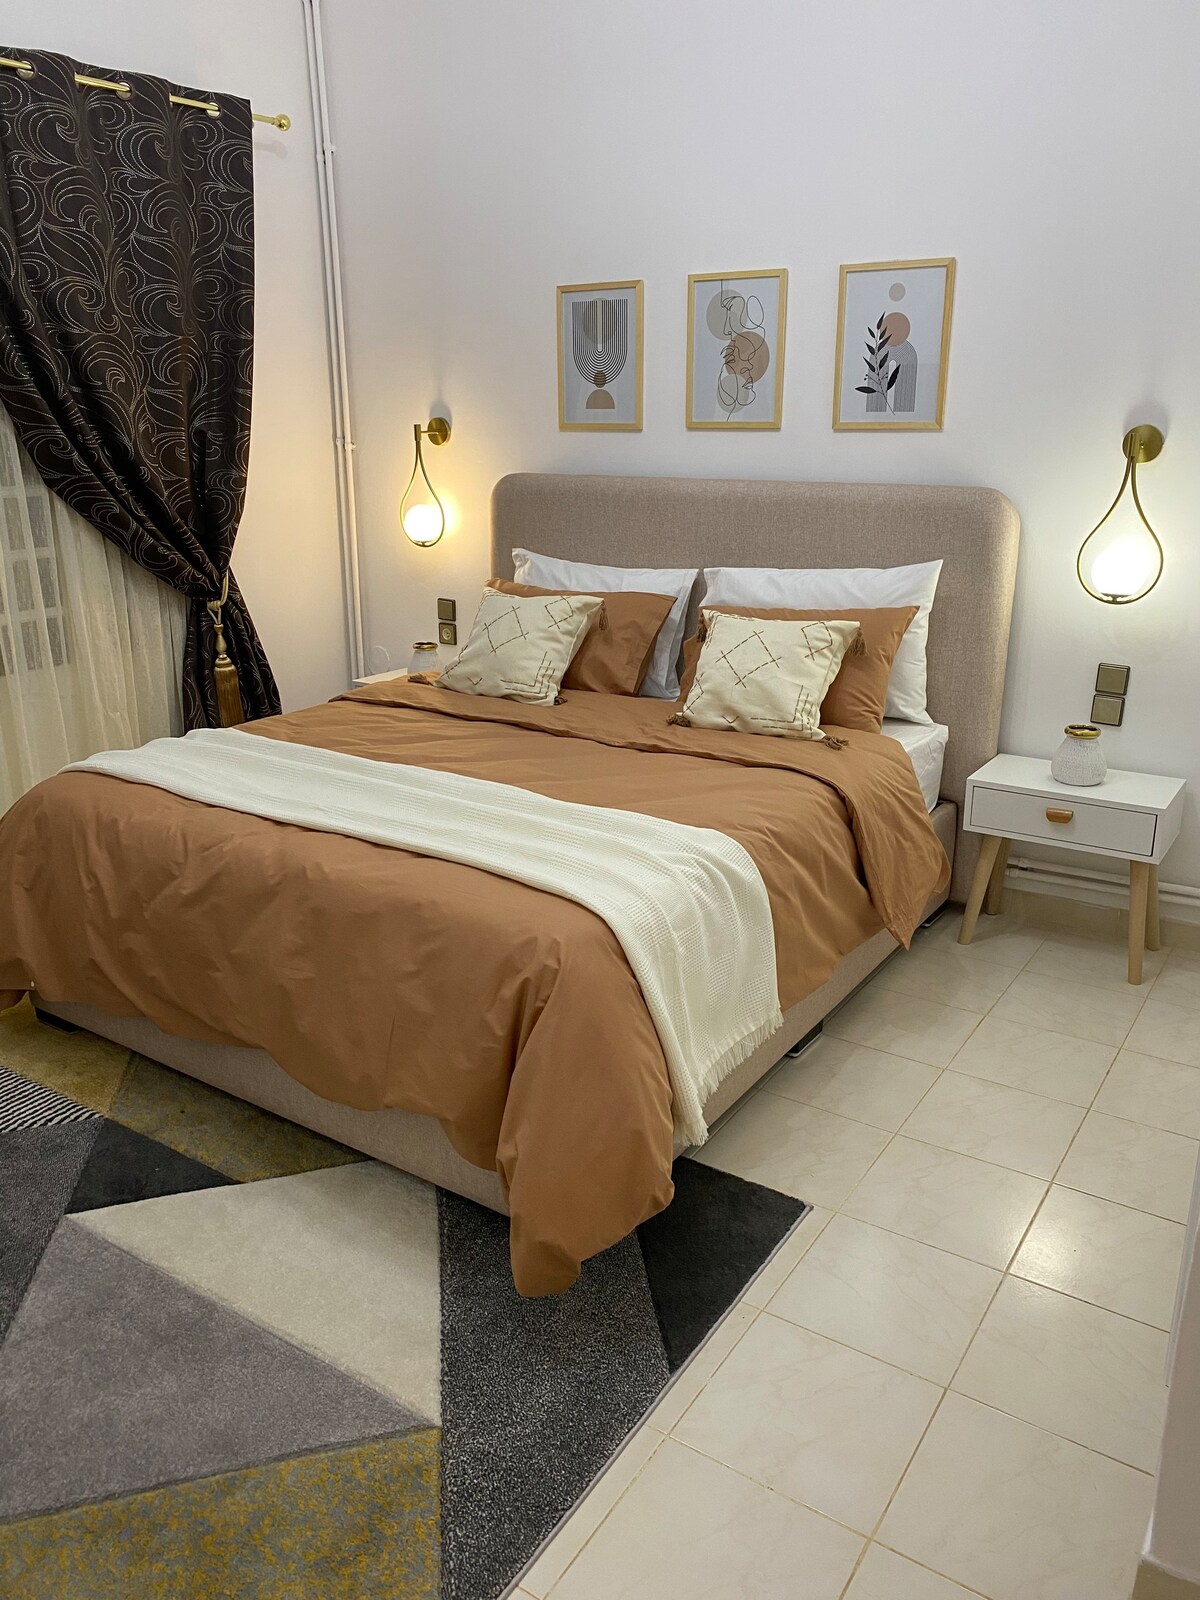 2#Chambres d’hôtes luxe Oran